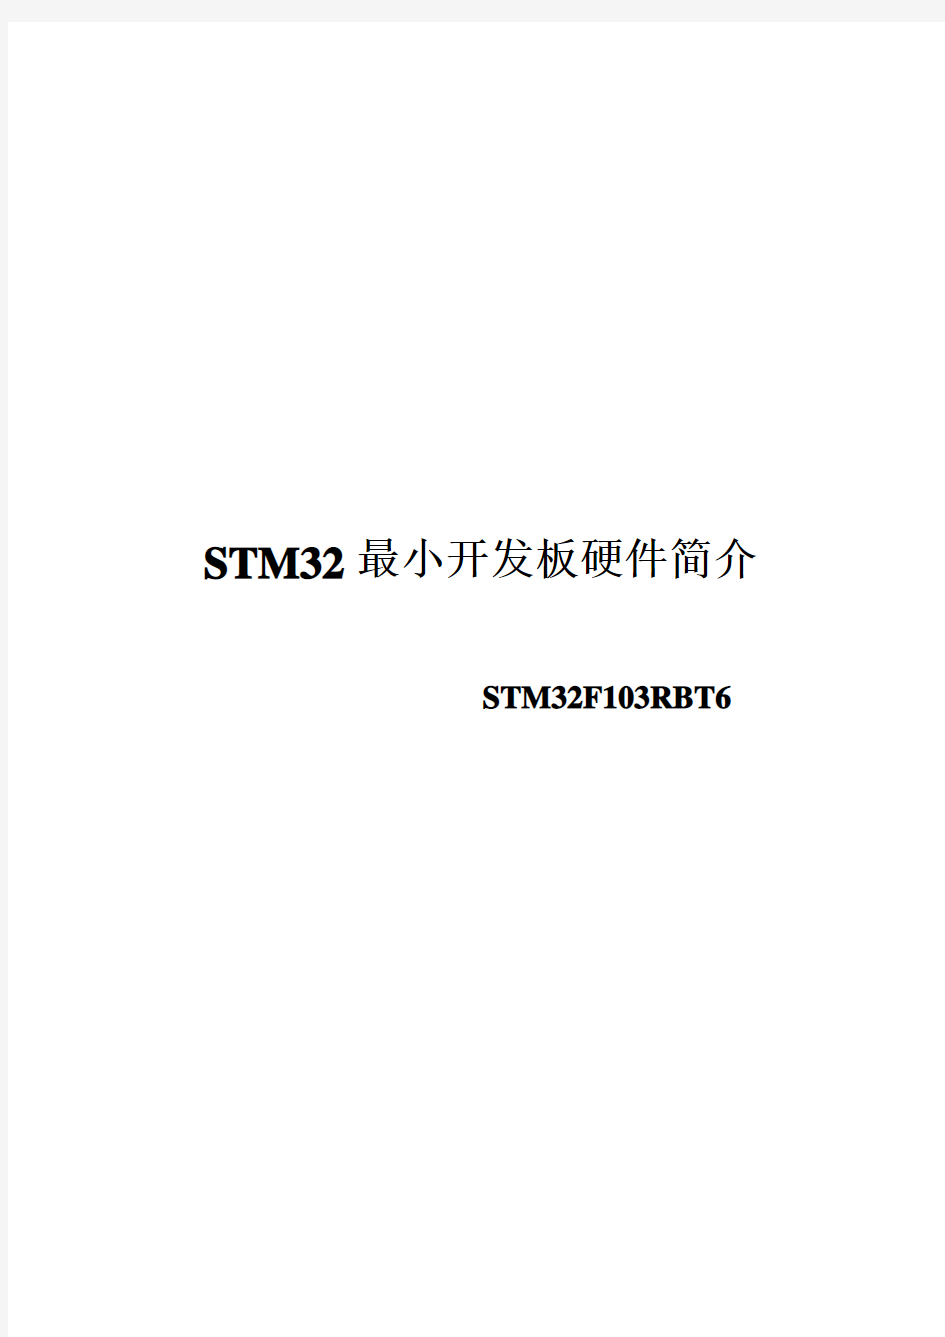 STM32开发板介绍